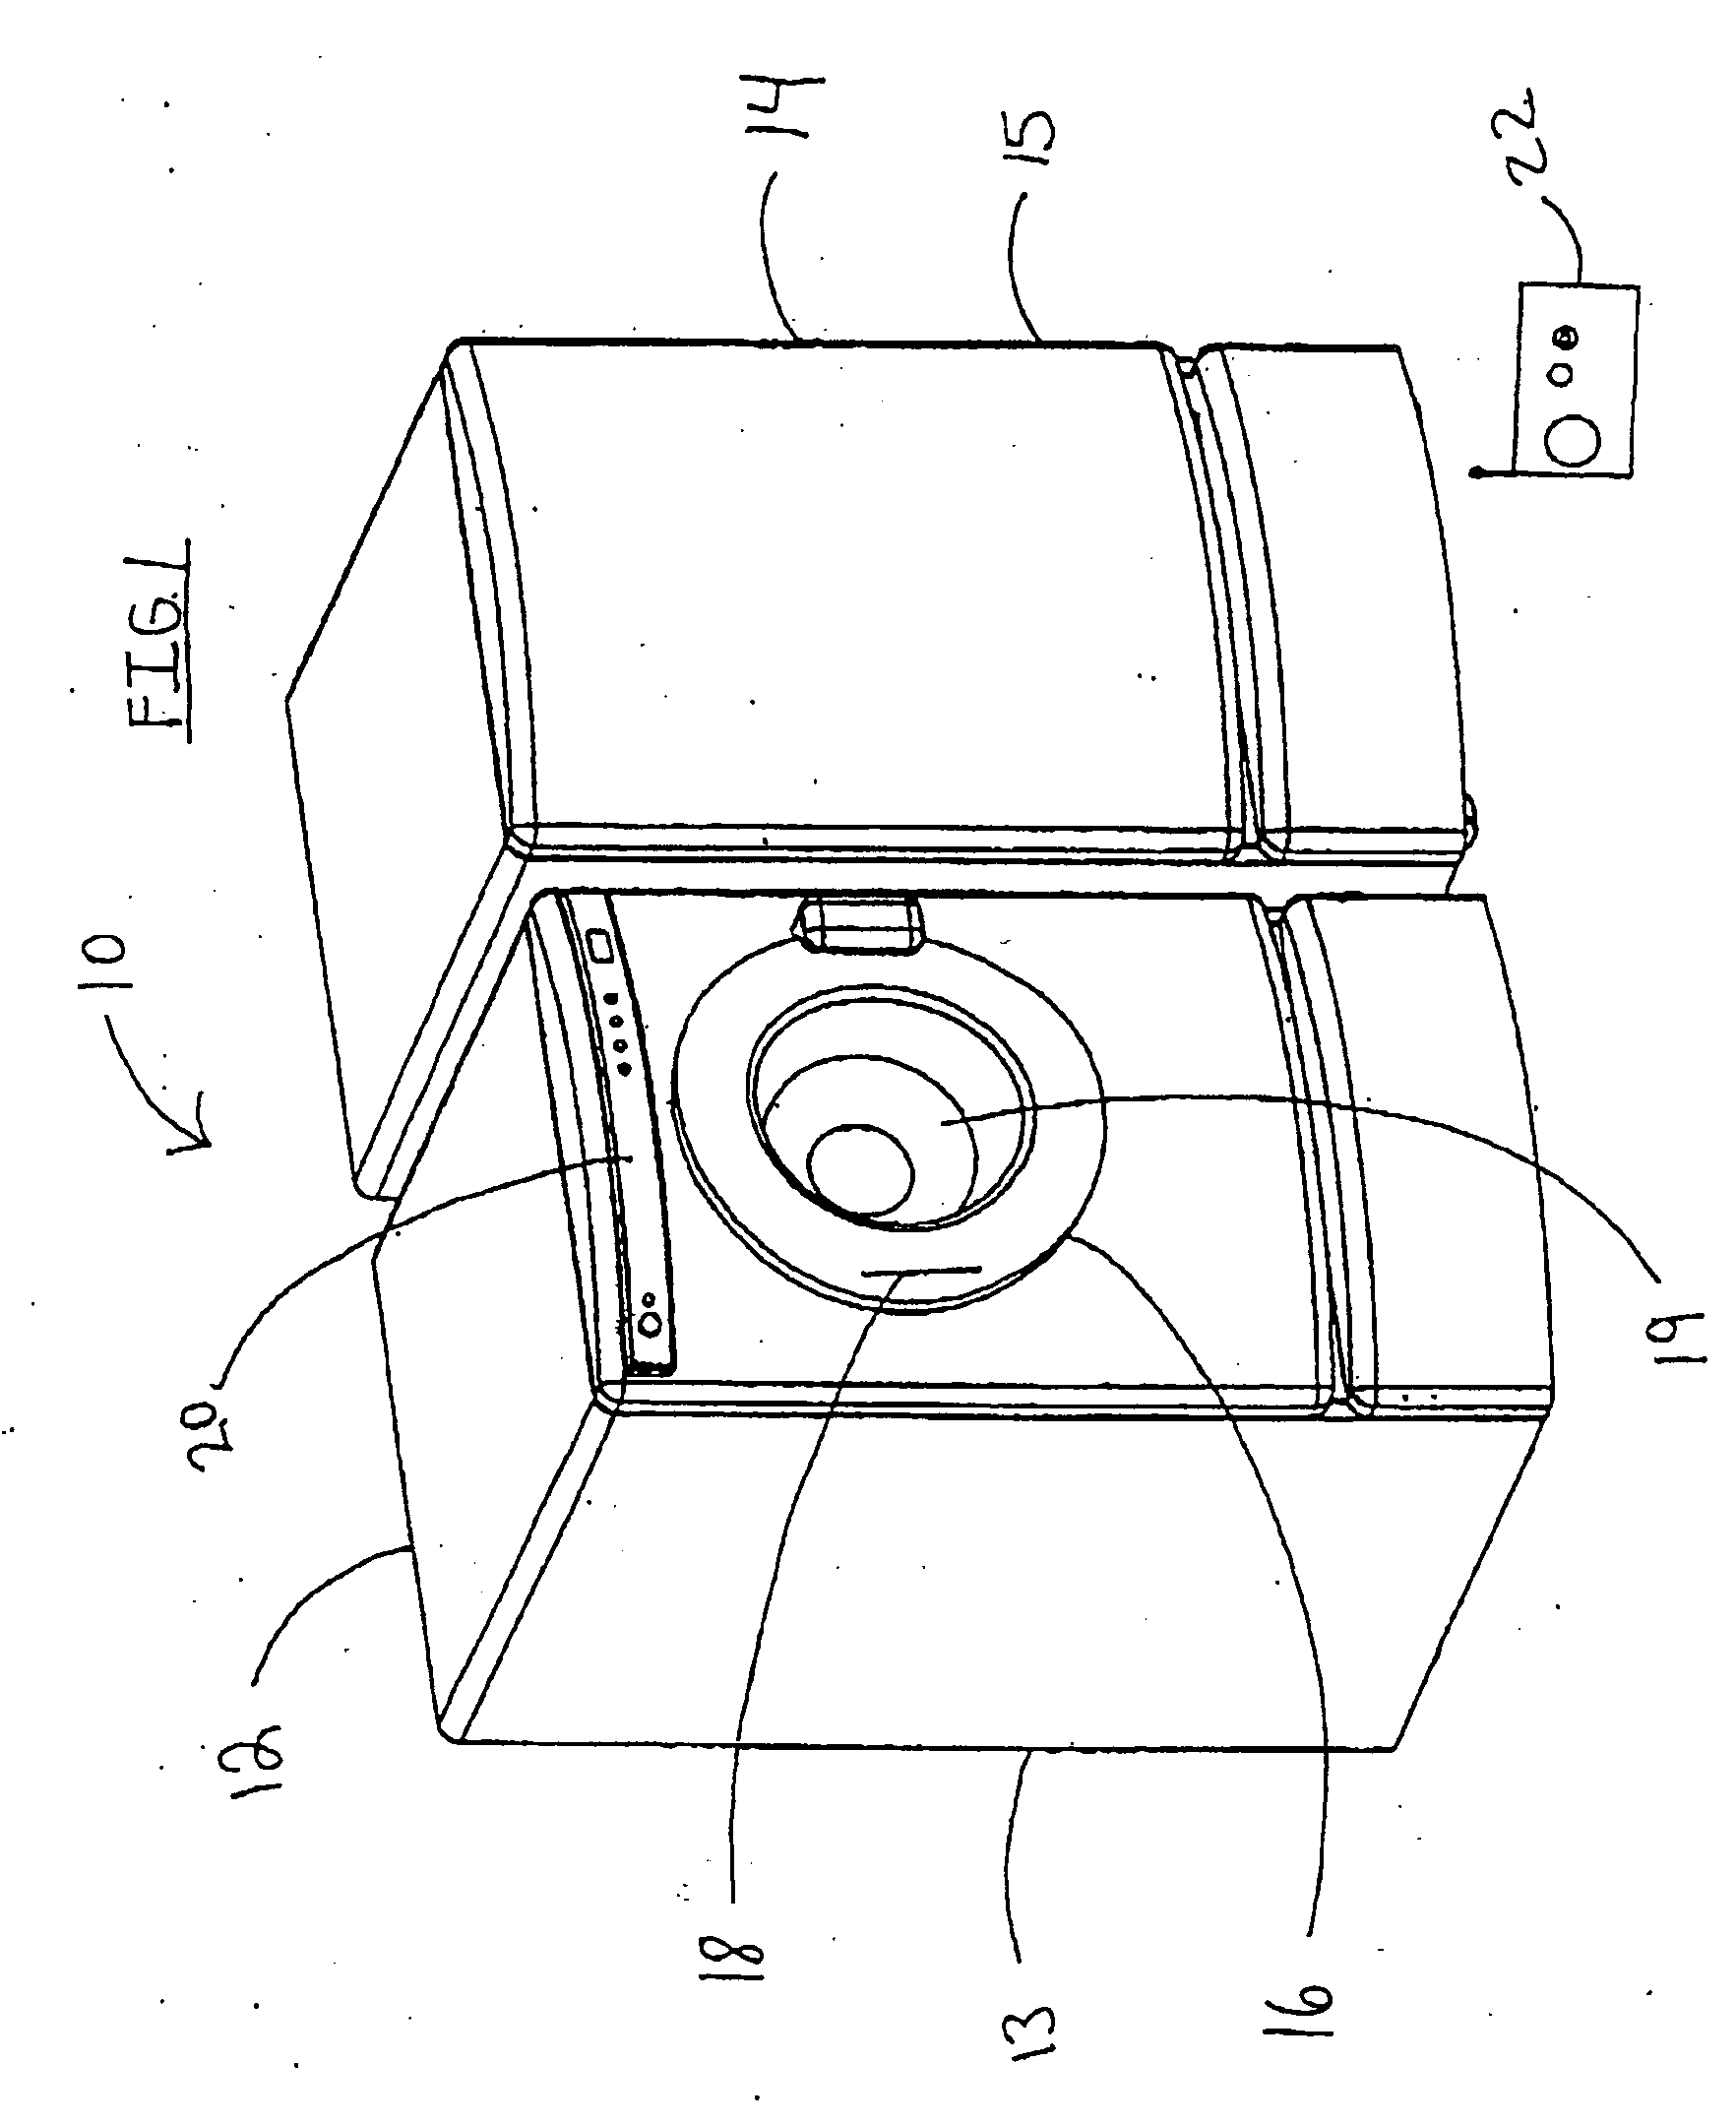 Non-aqueous washing machine with modular construction